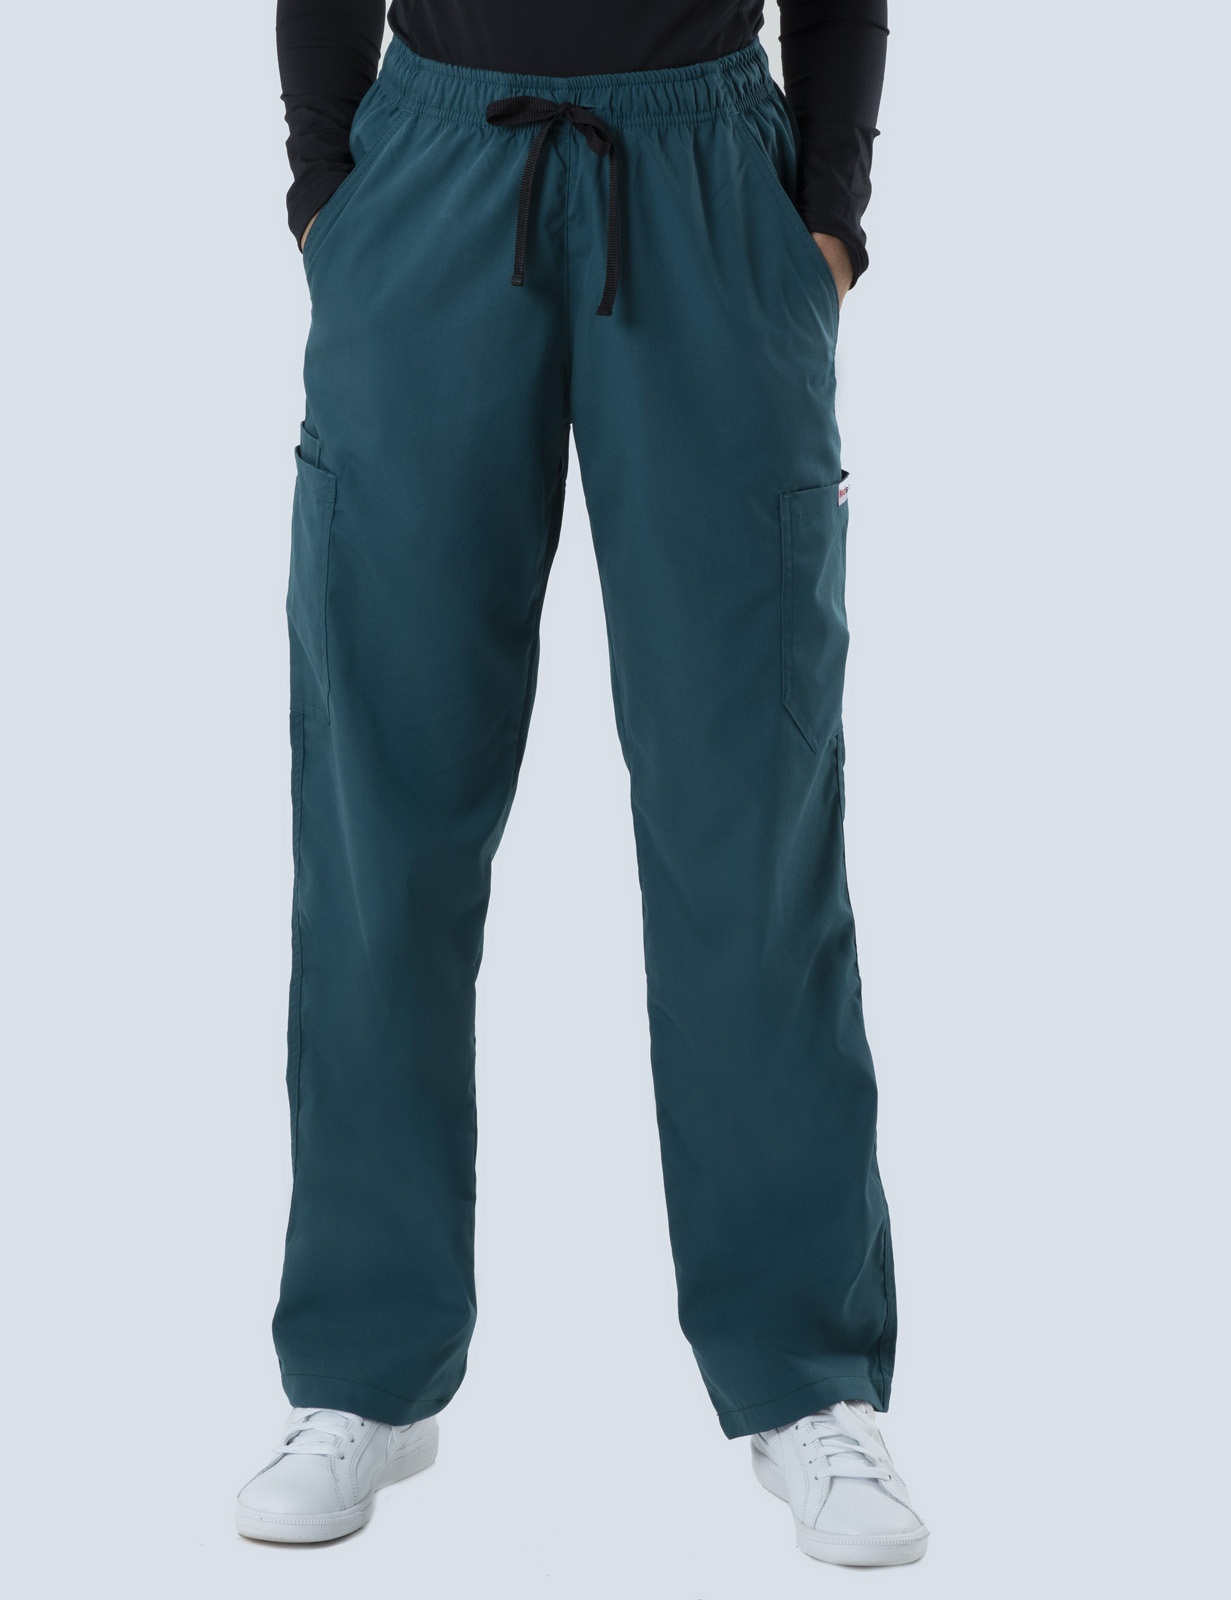 Biloela Hospital Healthcare Department Uniform Set Bundle Women's Fit Spandex Top and Cargo pants in Caribbean incl Logos)